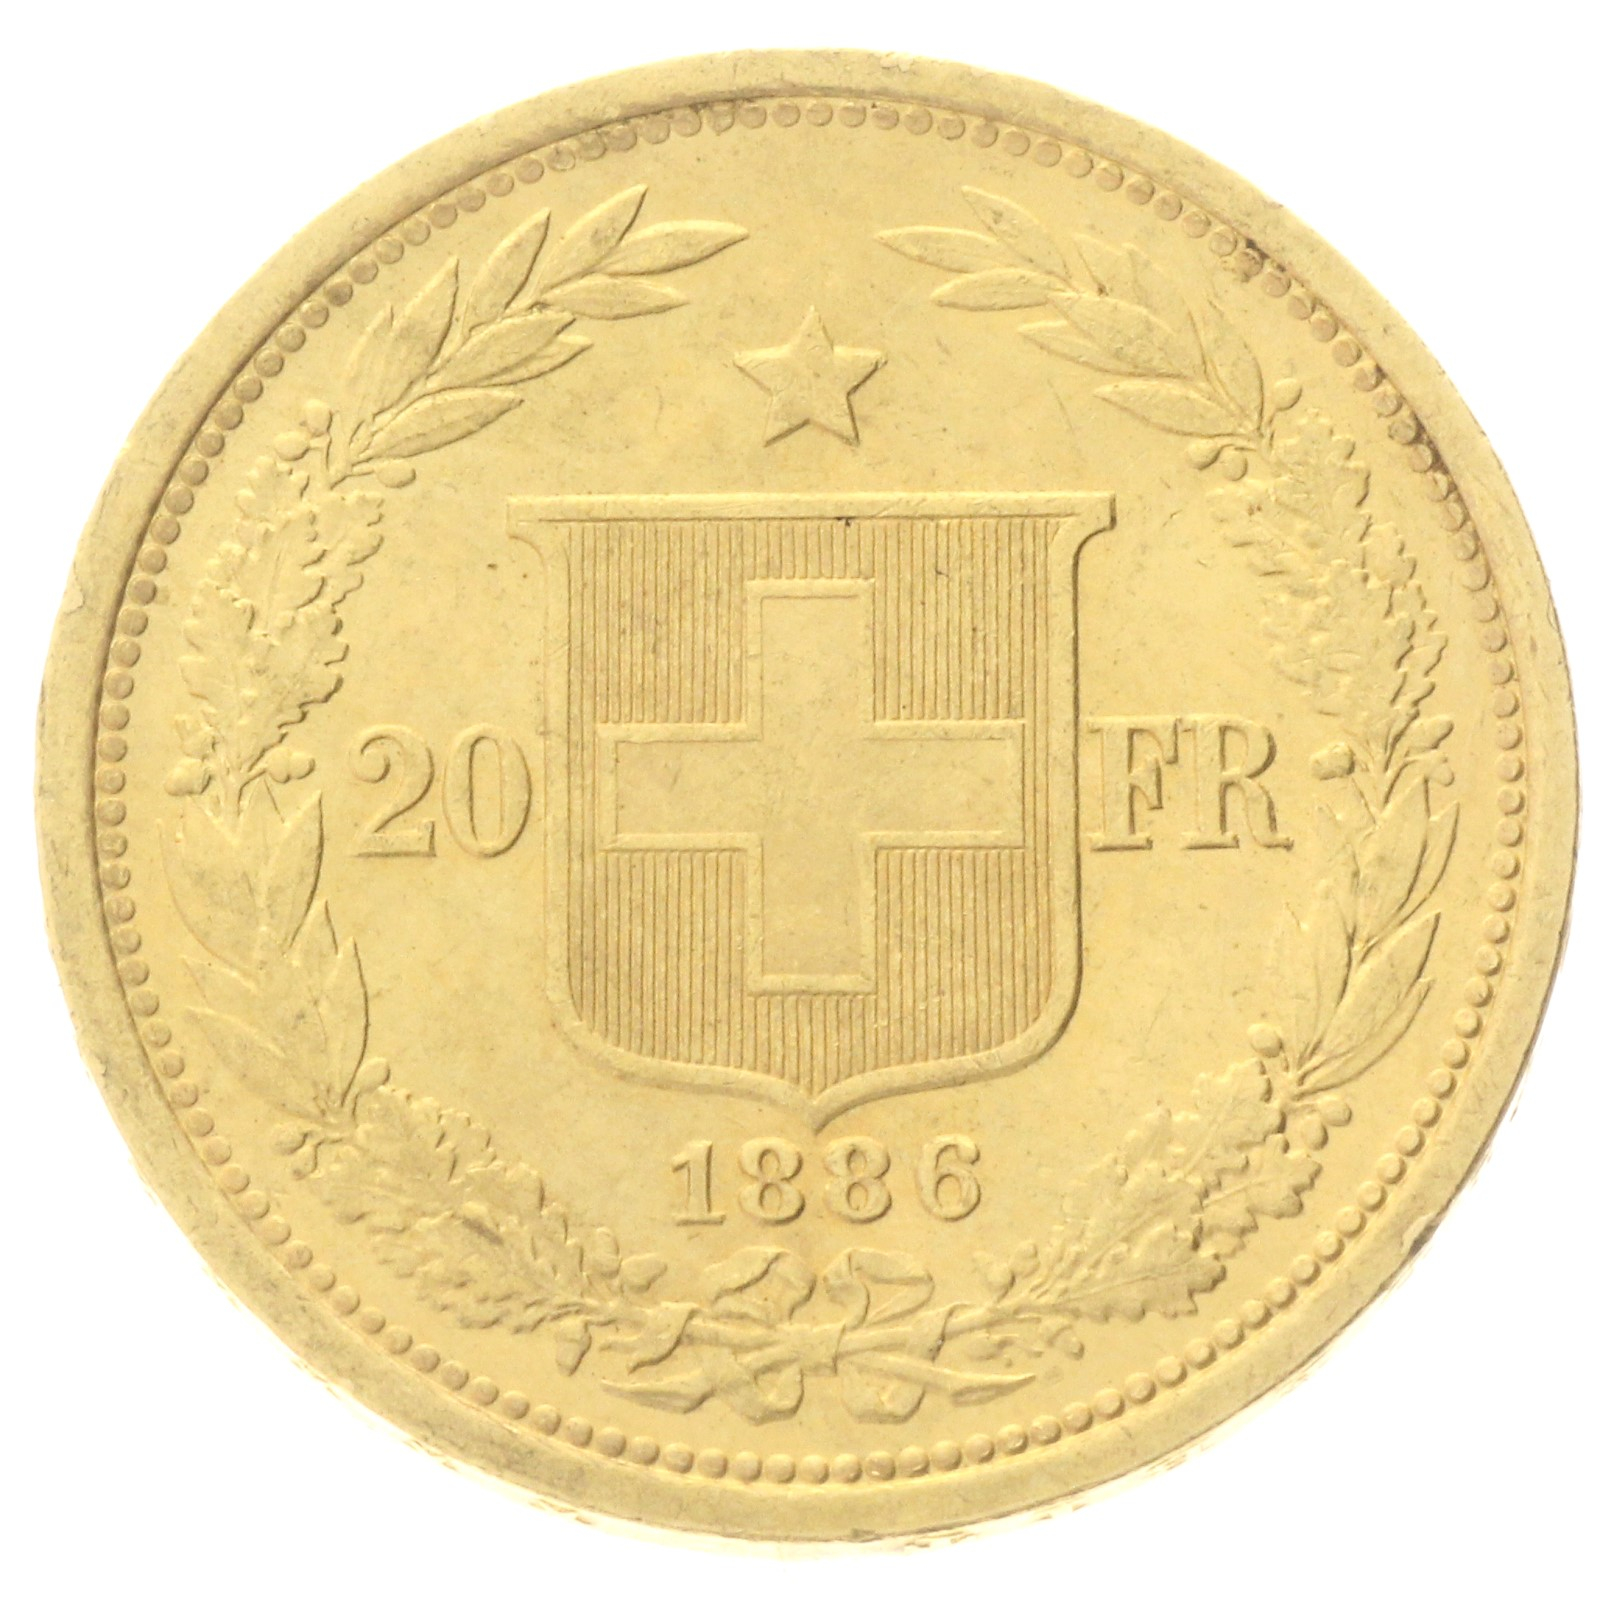 Switzerland - 20 francs - 1886 